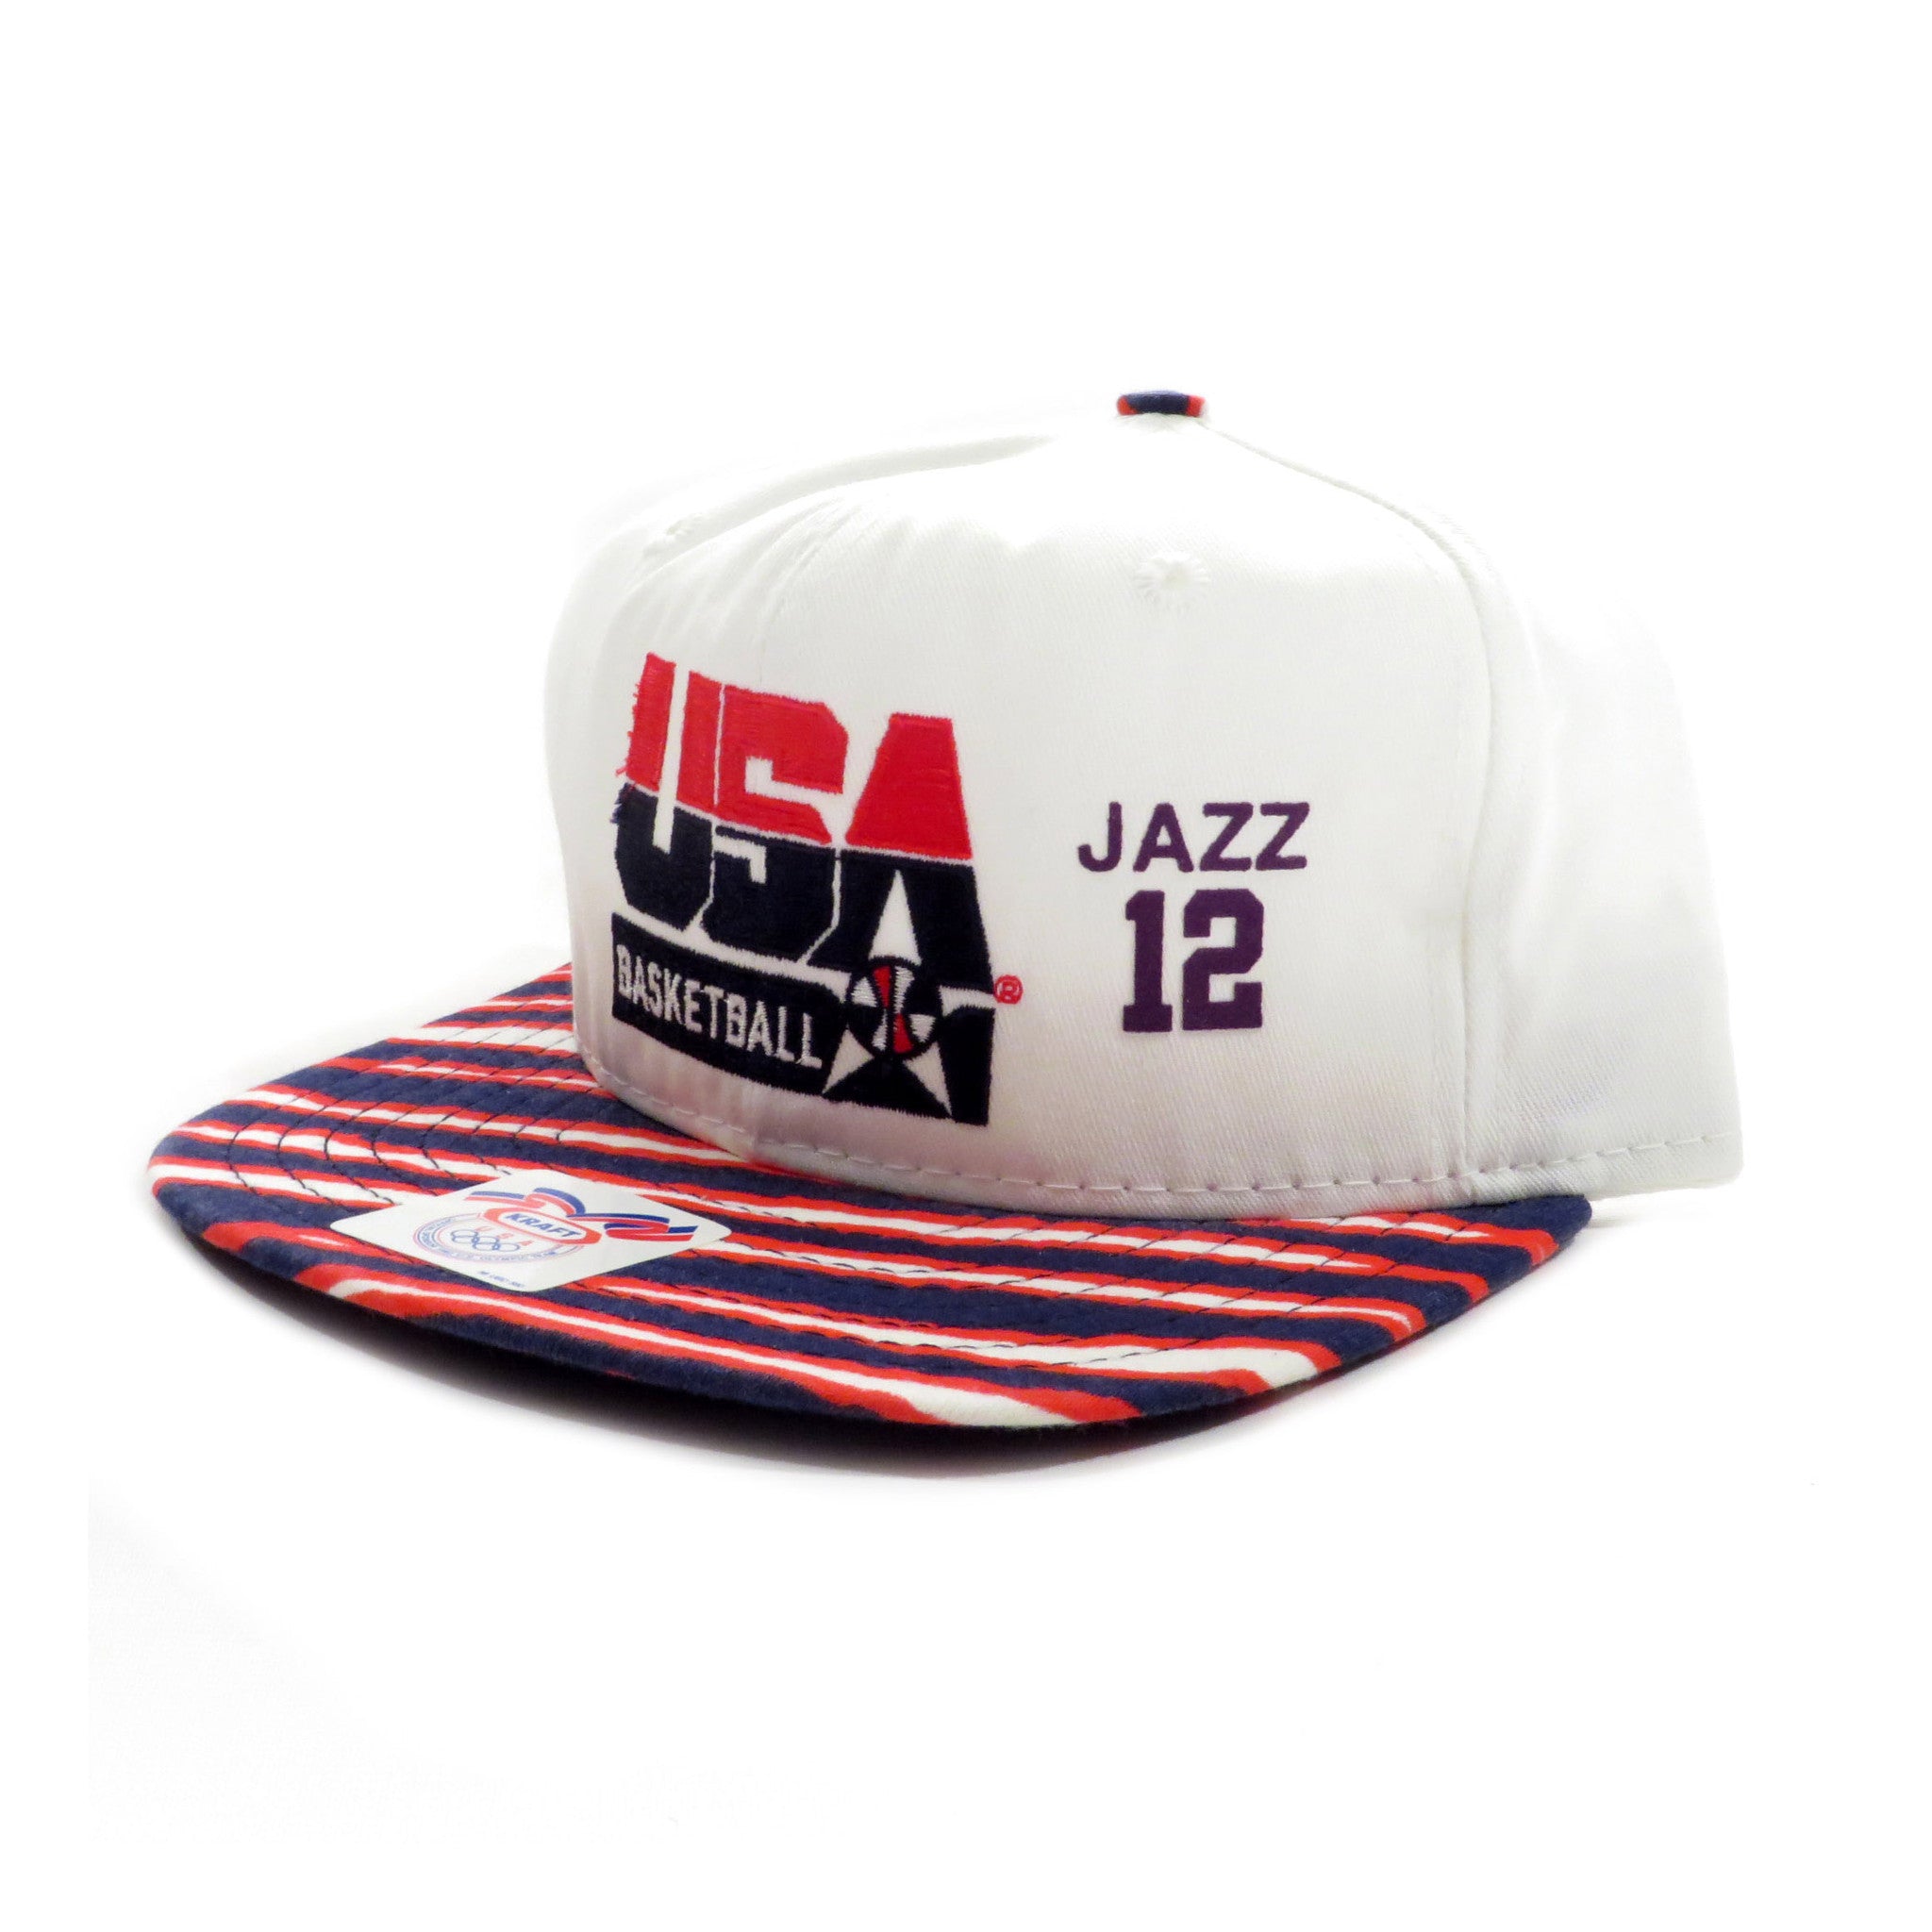 USA Basketball Stockton 12 Jazz Zubaz Snapback Hat